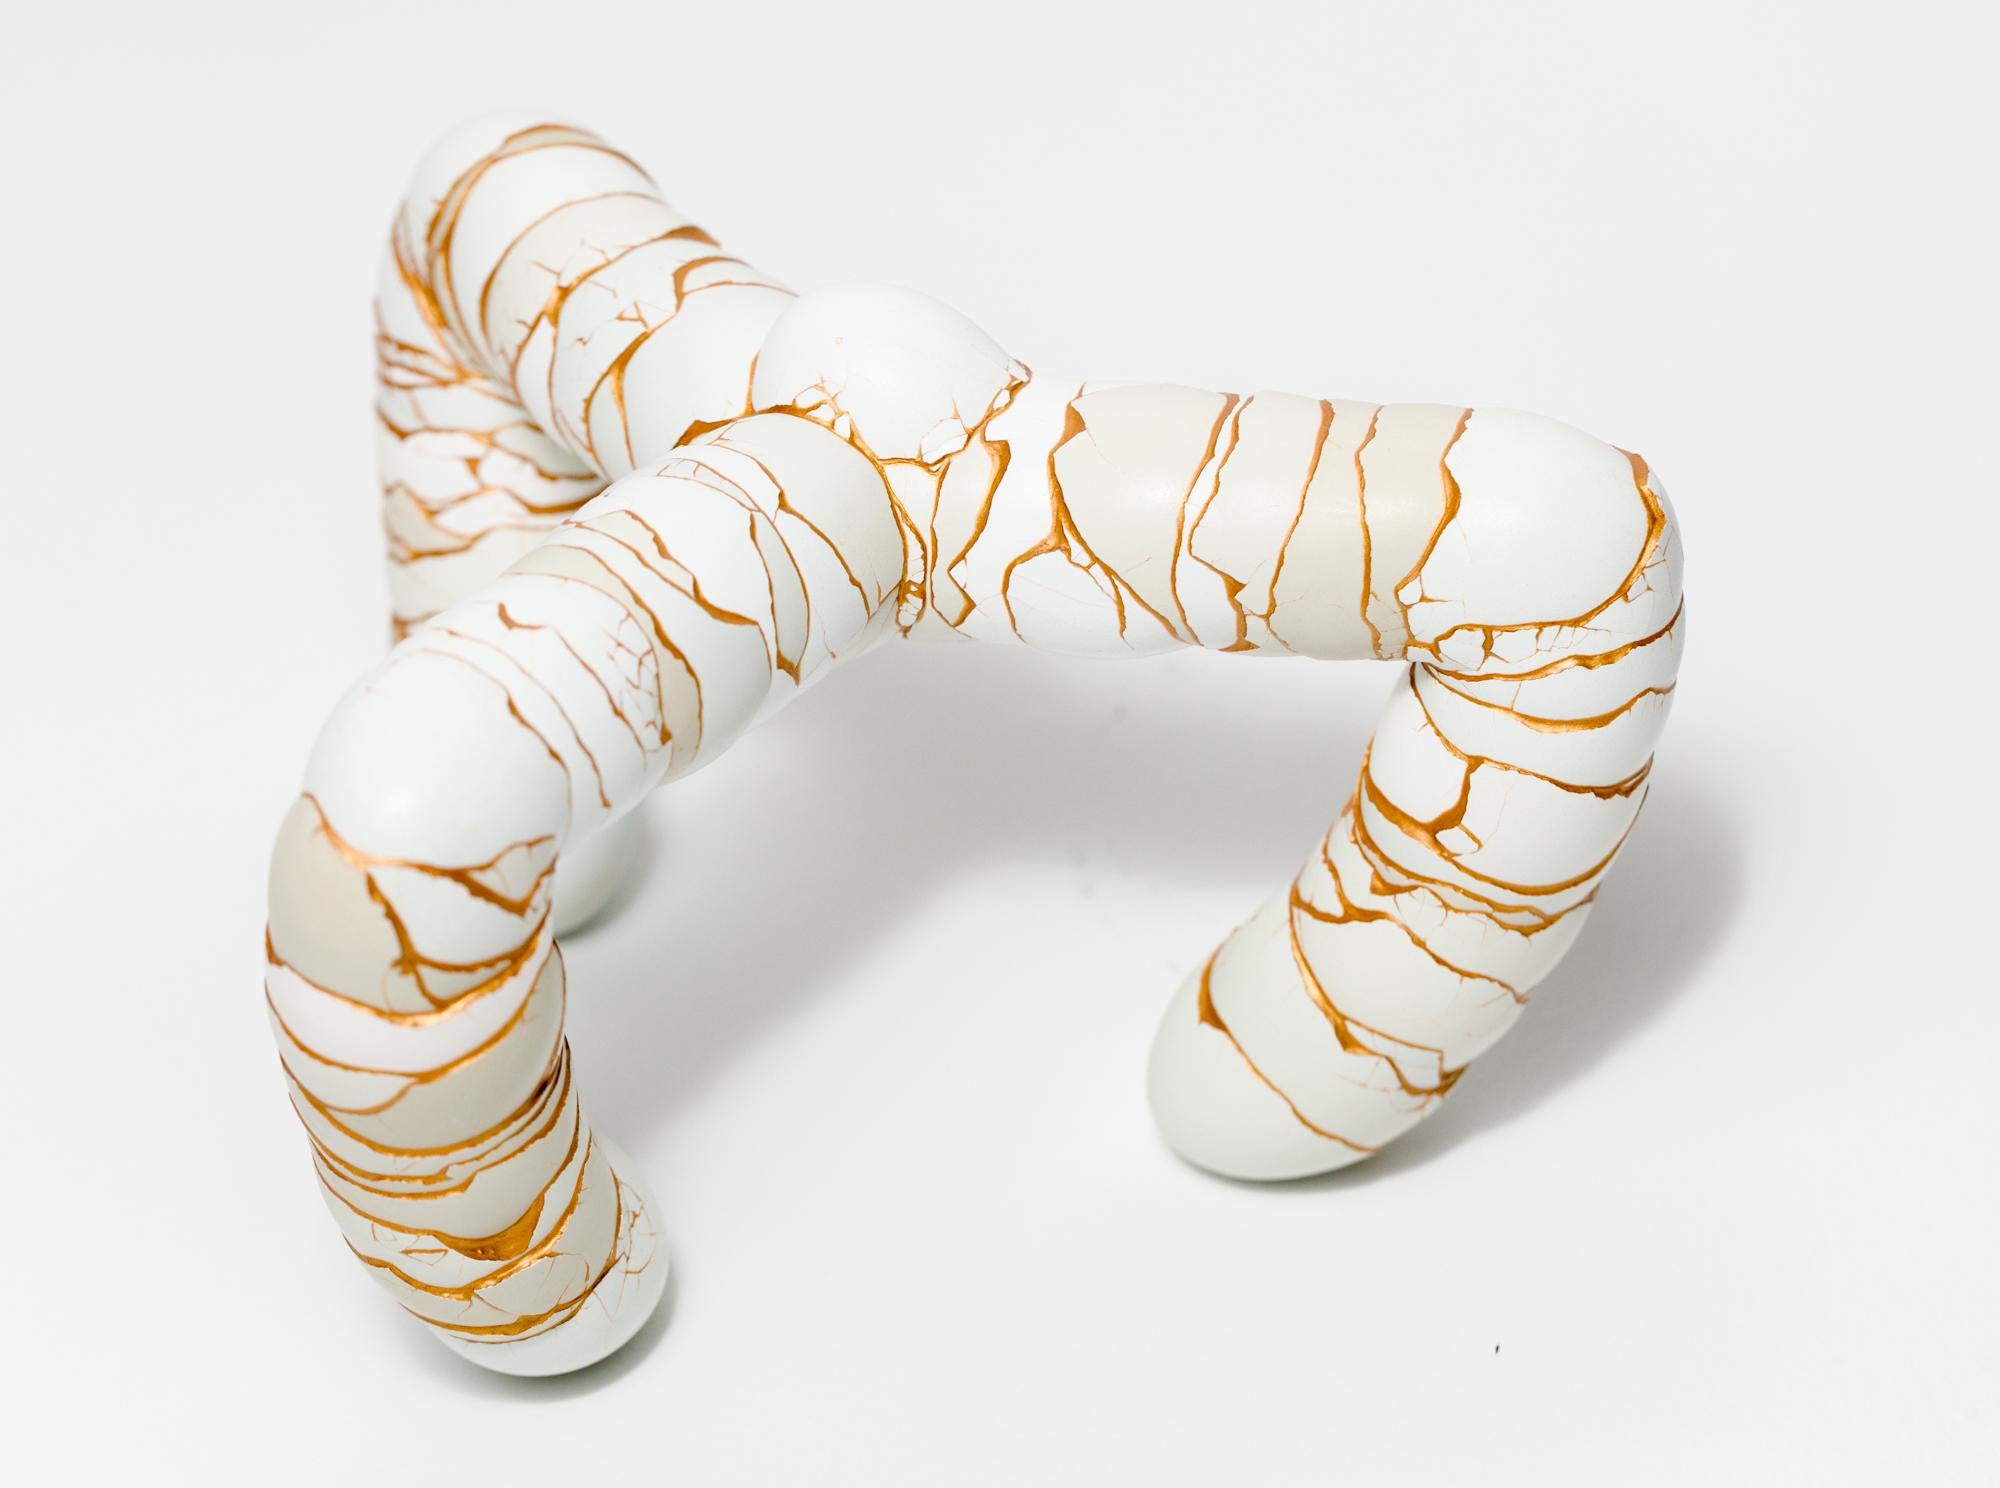 "Tripod", Reconstructed egg assemblage - Mixed Media Art by Katie VanVliet